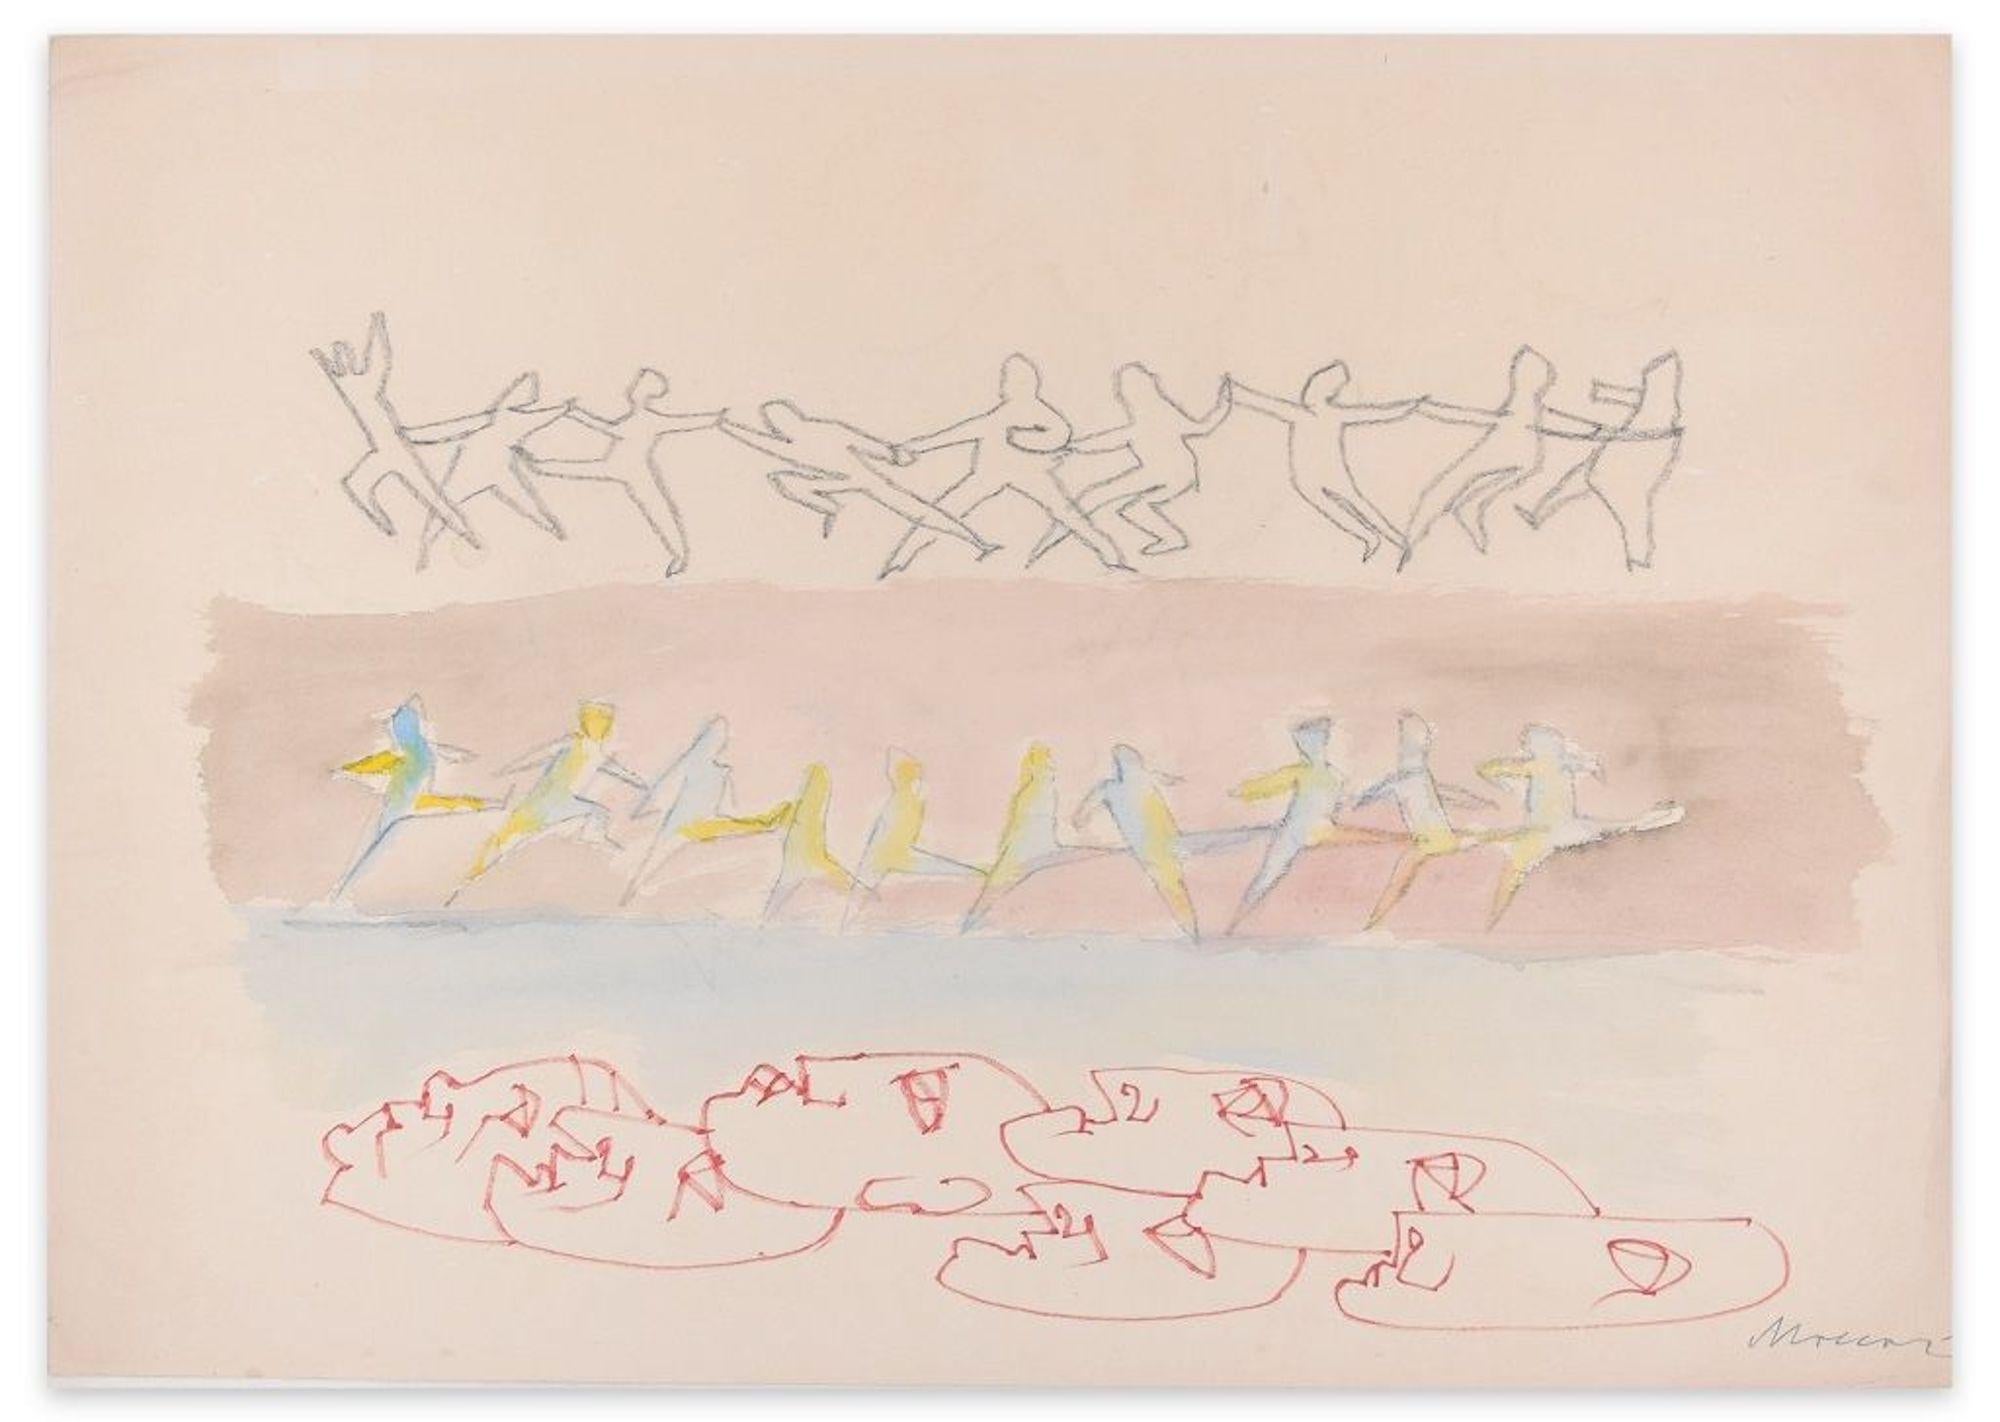  Mino Maccari Figurative Art - Parade - Original Charcoal, Red Marker and Watercolor by M. Maccari - 1970s